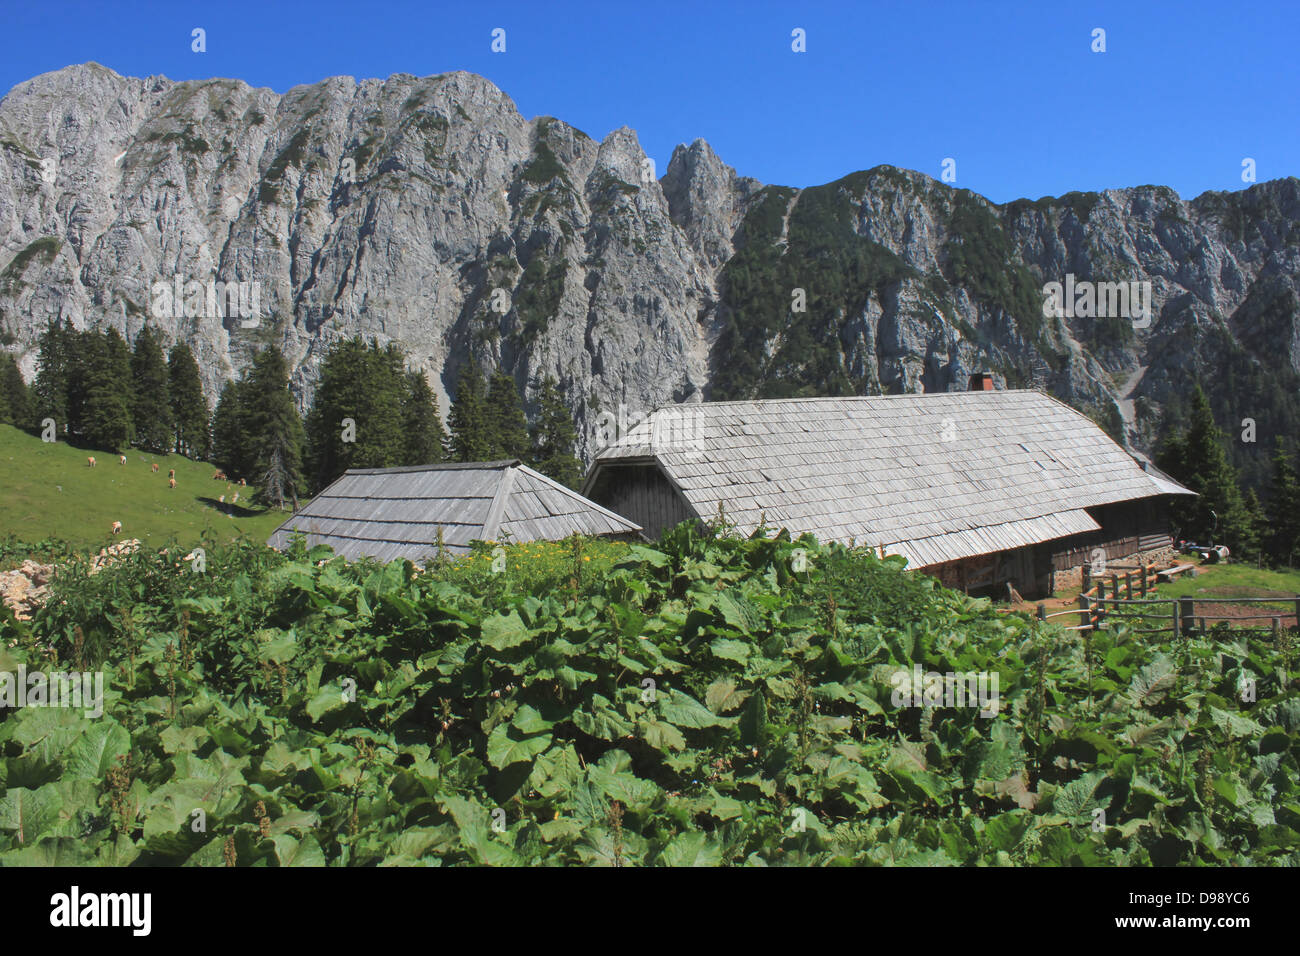 Alpine hut Korosica in Karavanke mountains (Slovenian Alps) with monks rhubarb (rumex alpinus) in foreground Stock Photo